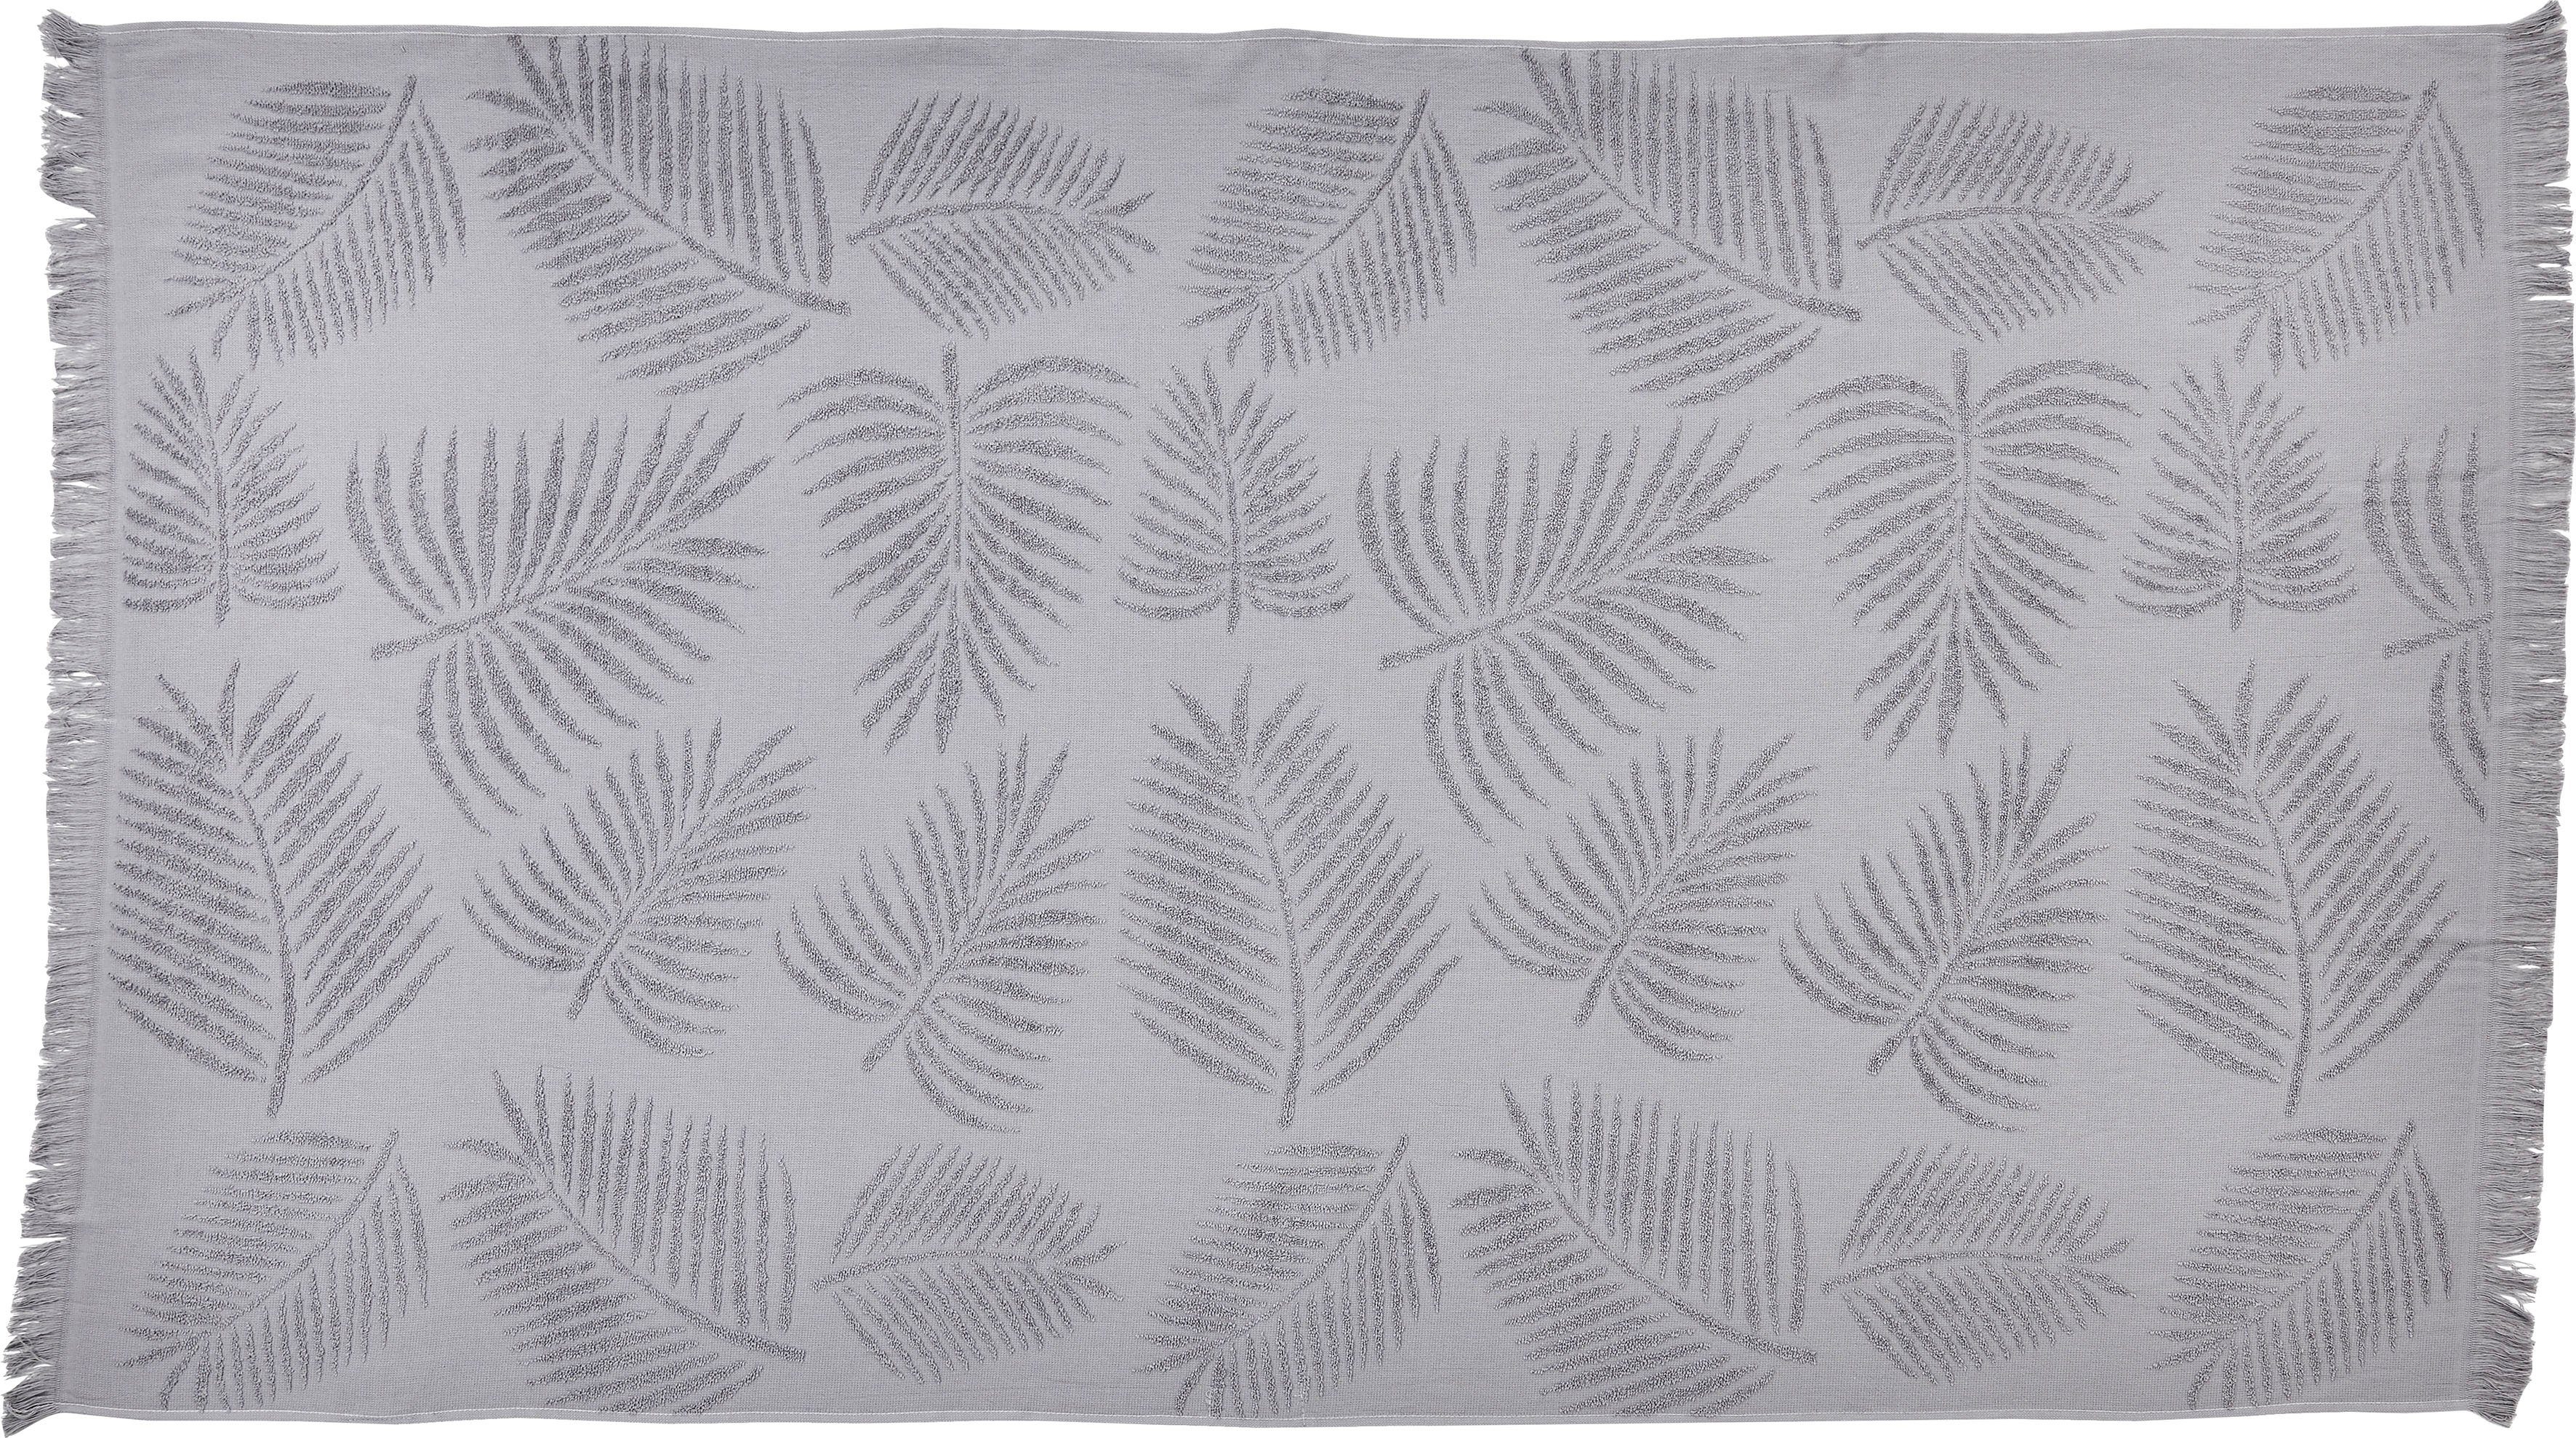 done.® Hamam-baddoeken Palm Leaves 90x160 cm, zachte & absorberende badstof binnenkant, gedessineerd, met franje, ideaal als strandlaken (1 stuk)